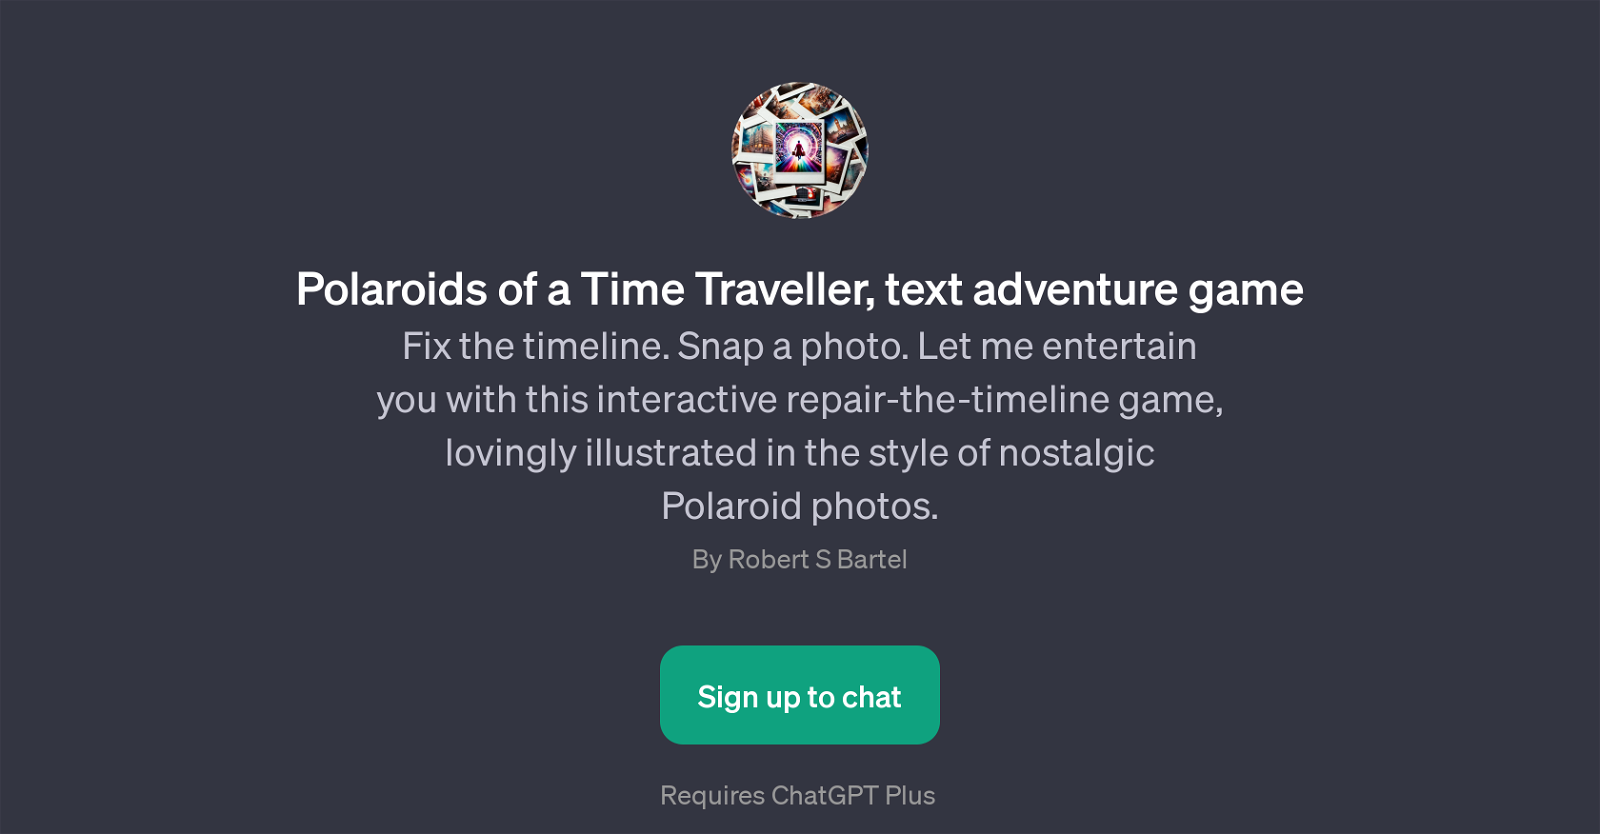 Polaroids of a Time Traveller website